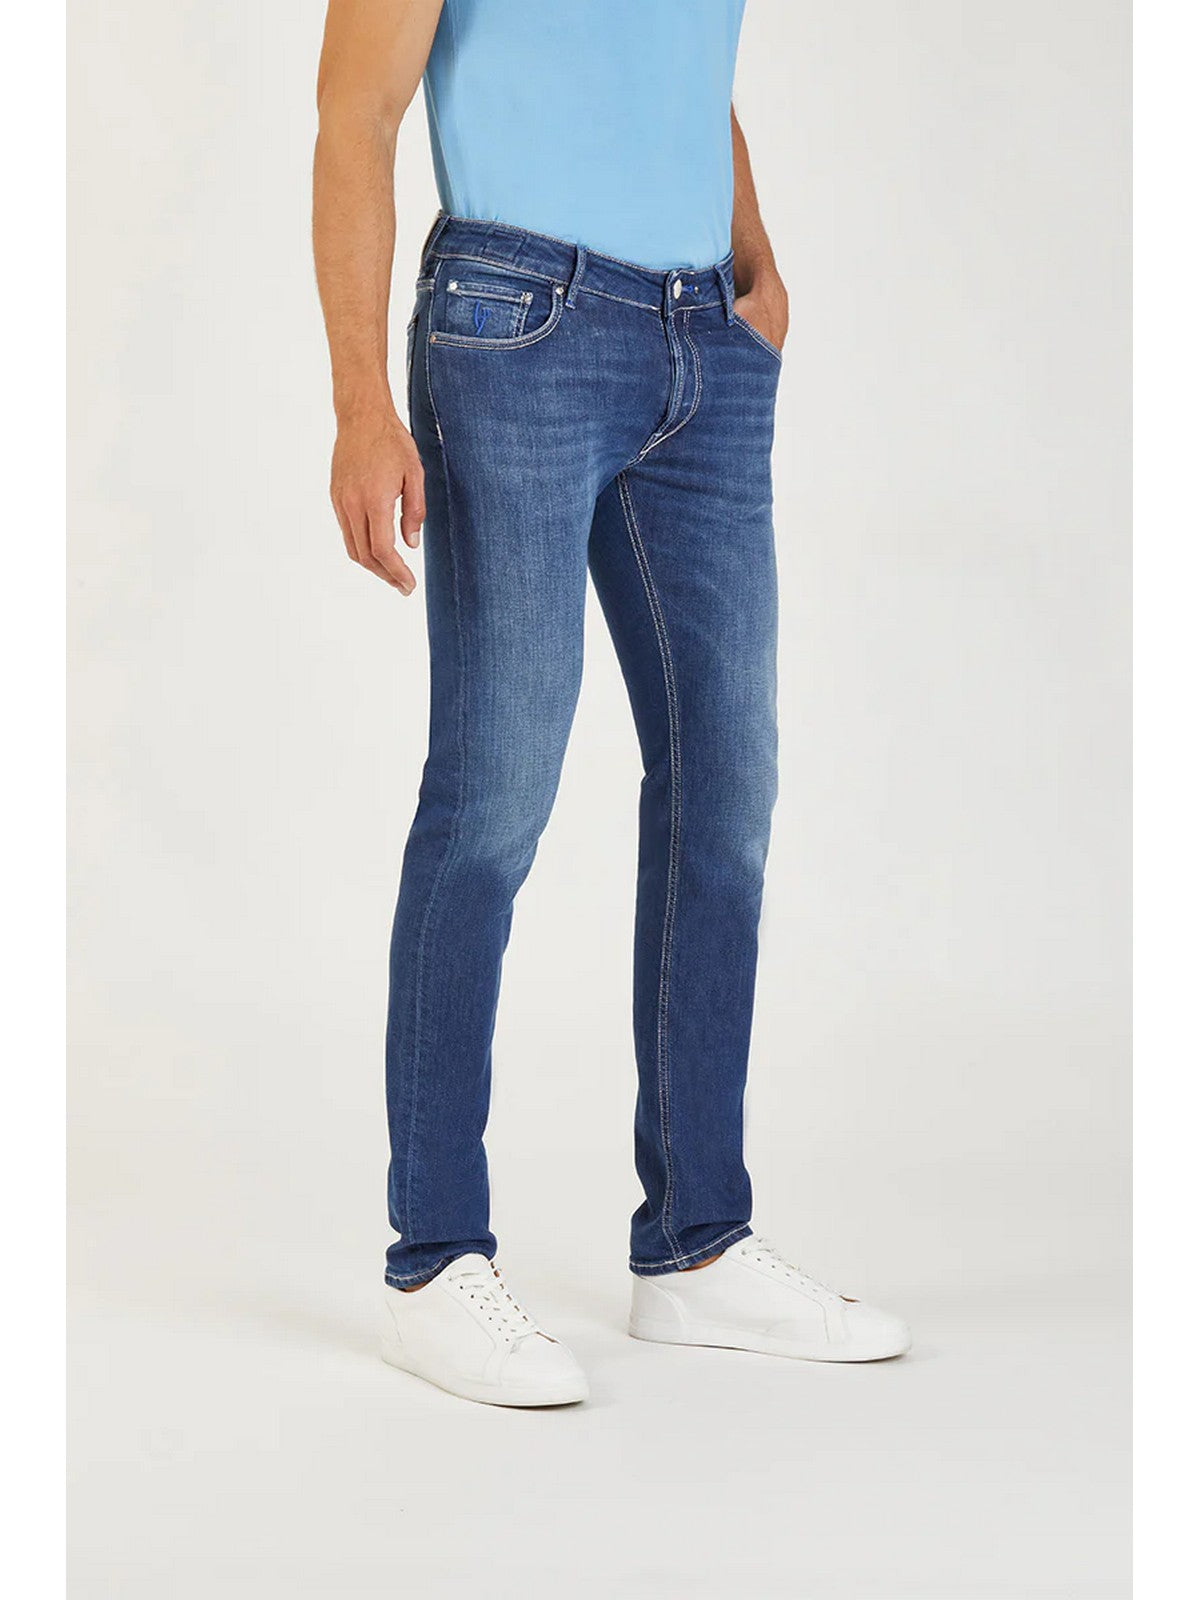 HANDPICKED Jeans Uomo  ORVIETO 03140W2 002 Blu